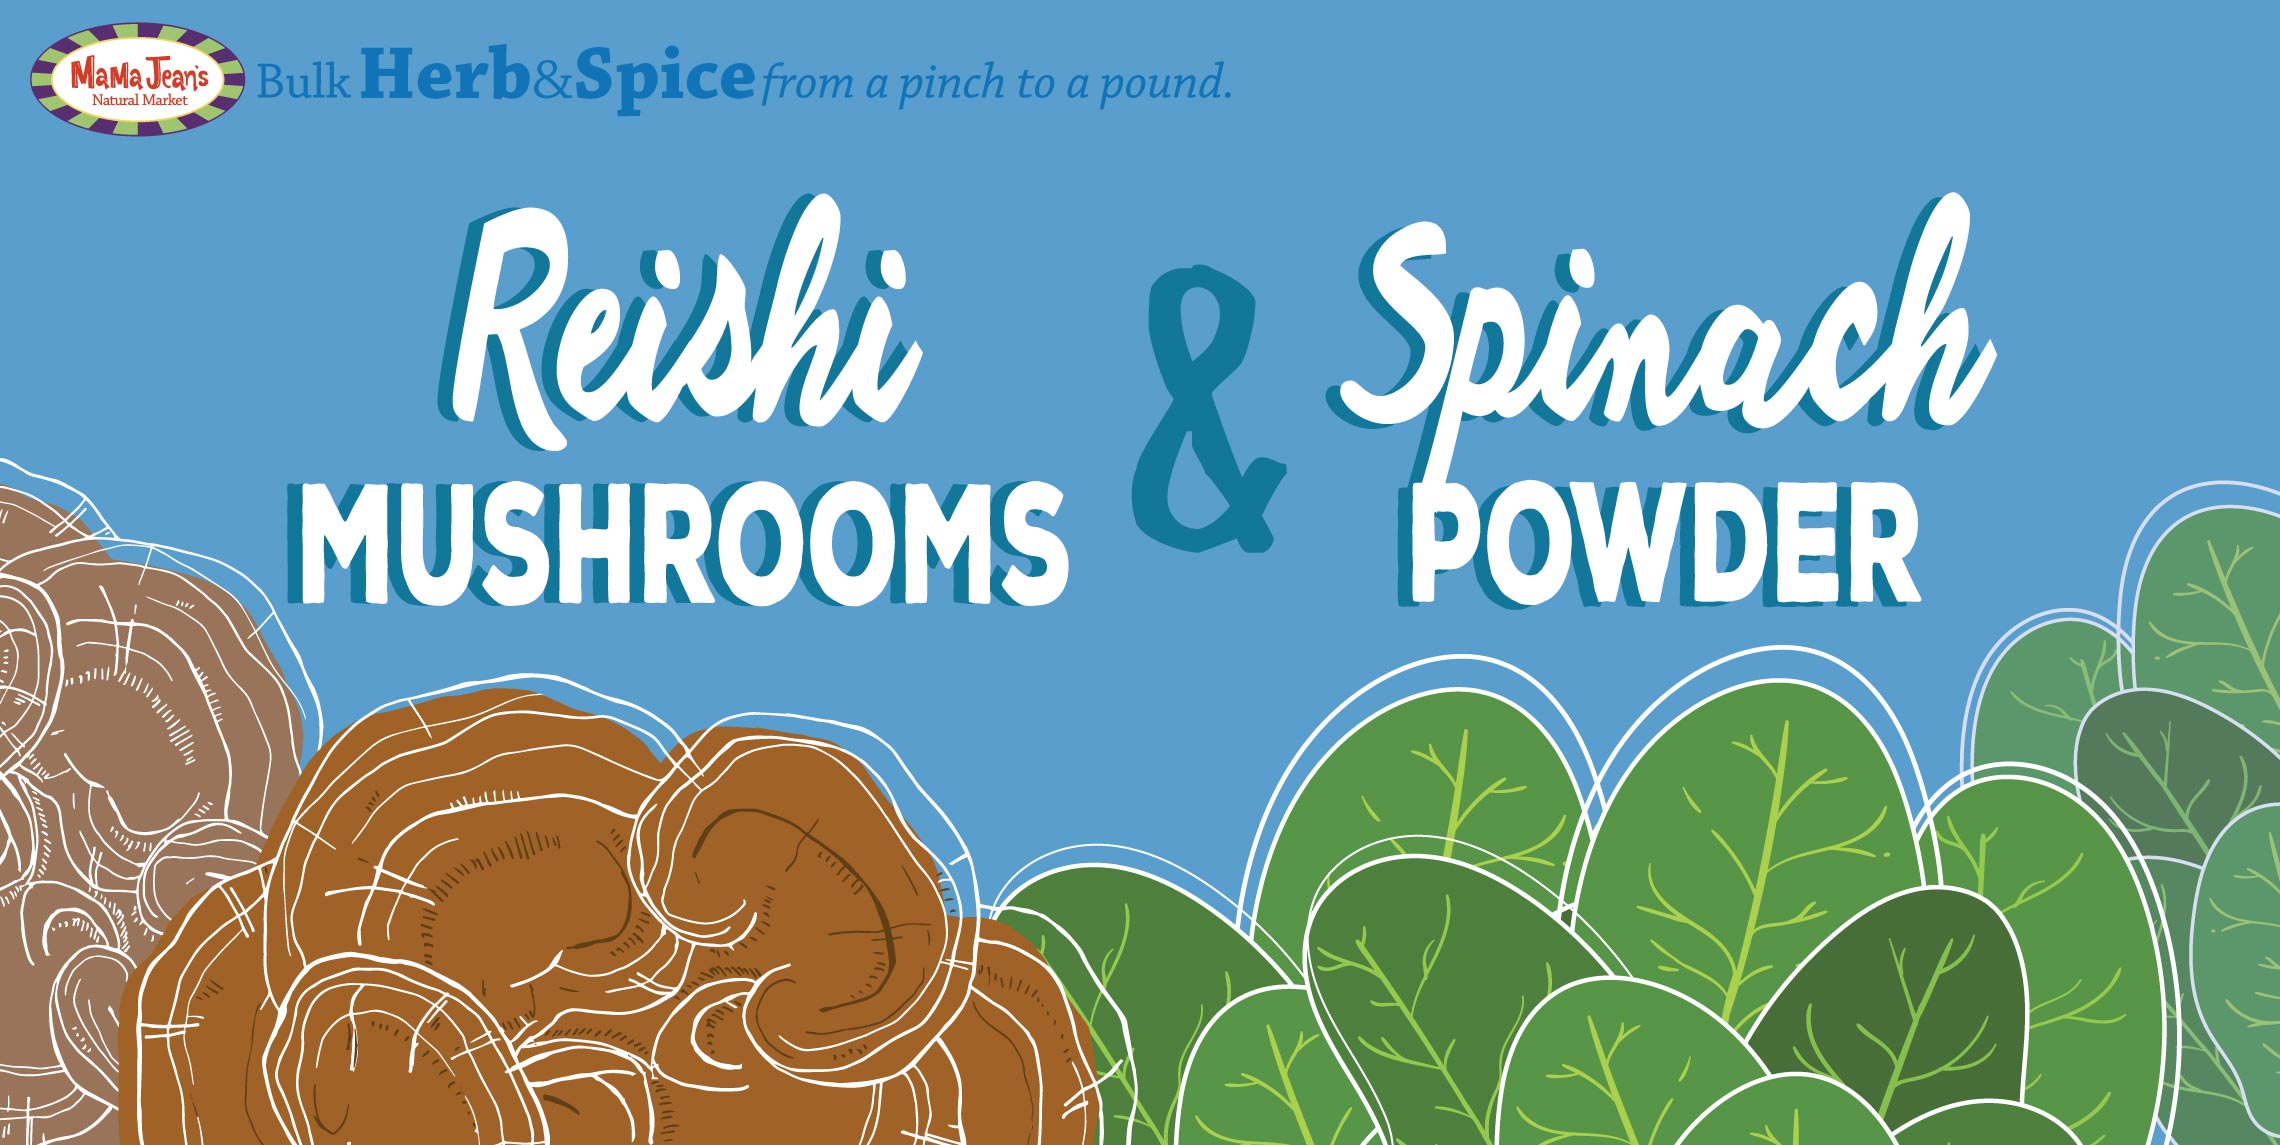 Reishi Mushroom and Spinach Powder